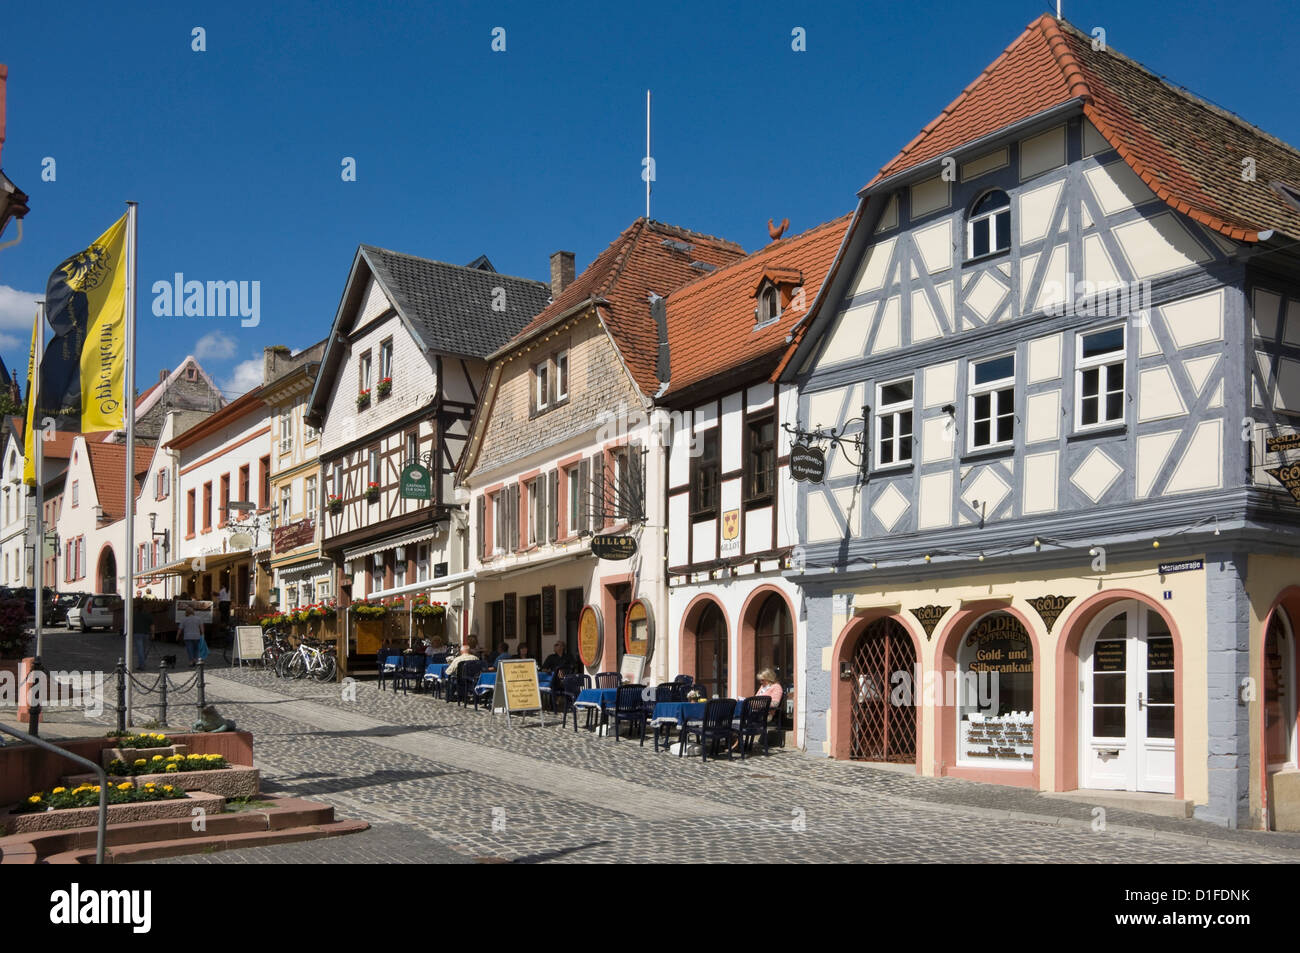 The main street, Merianstrasse, in the Rhine wine area of Oppenheim, Rhineland Palatinate, Germany, Europe Stock Photo